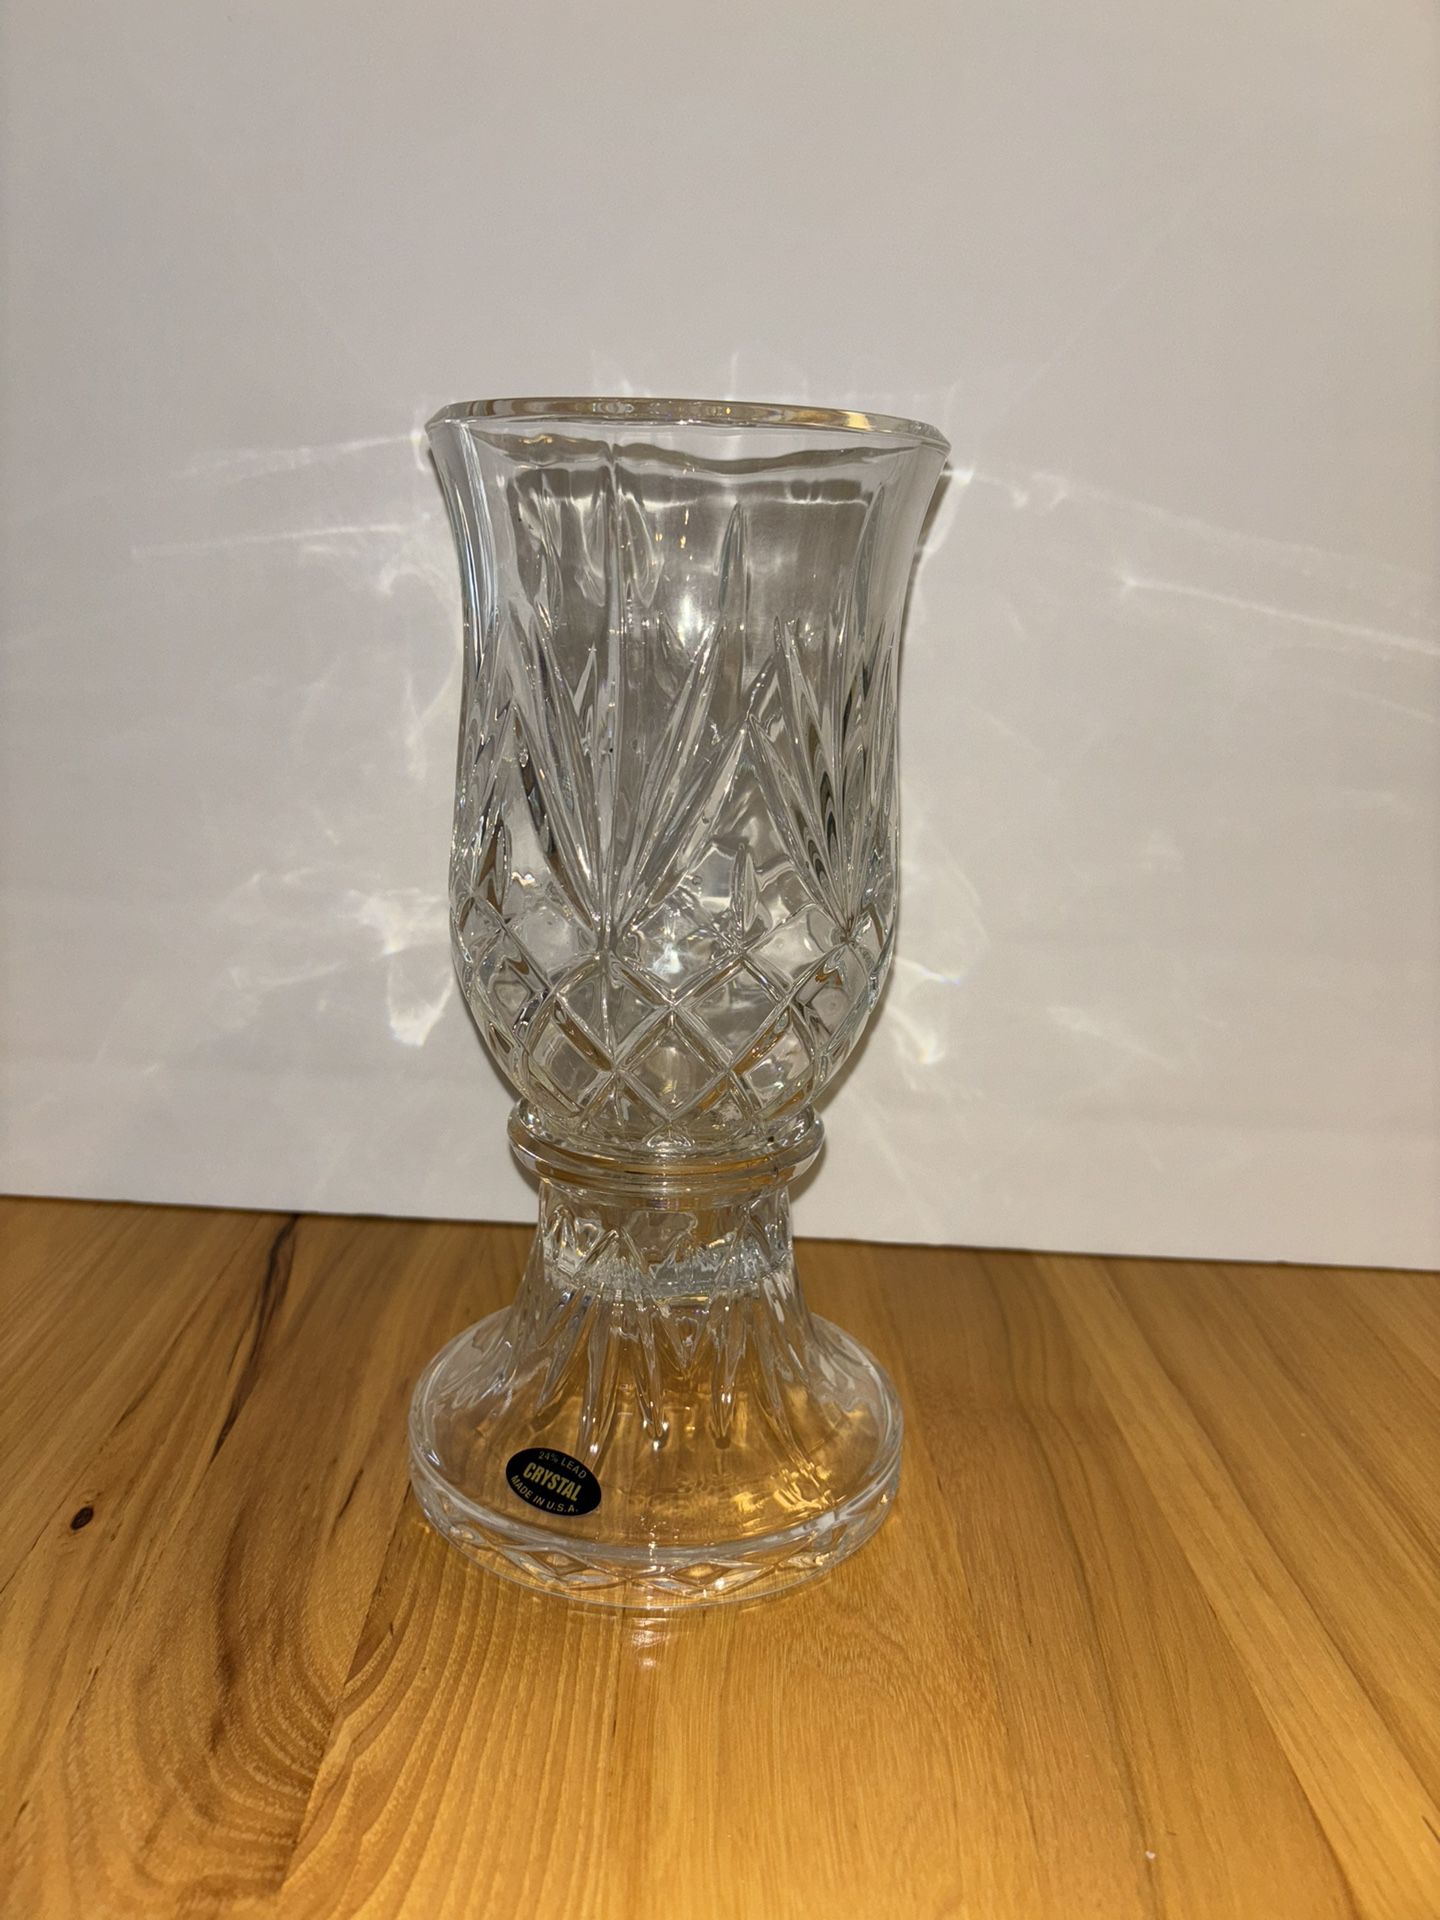 Vintage Partylite Crystal Savannah Lamp. No longer Produced. Mint